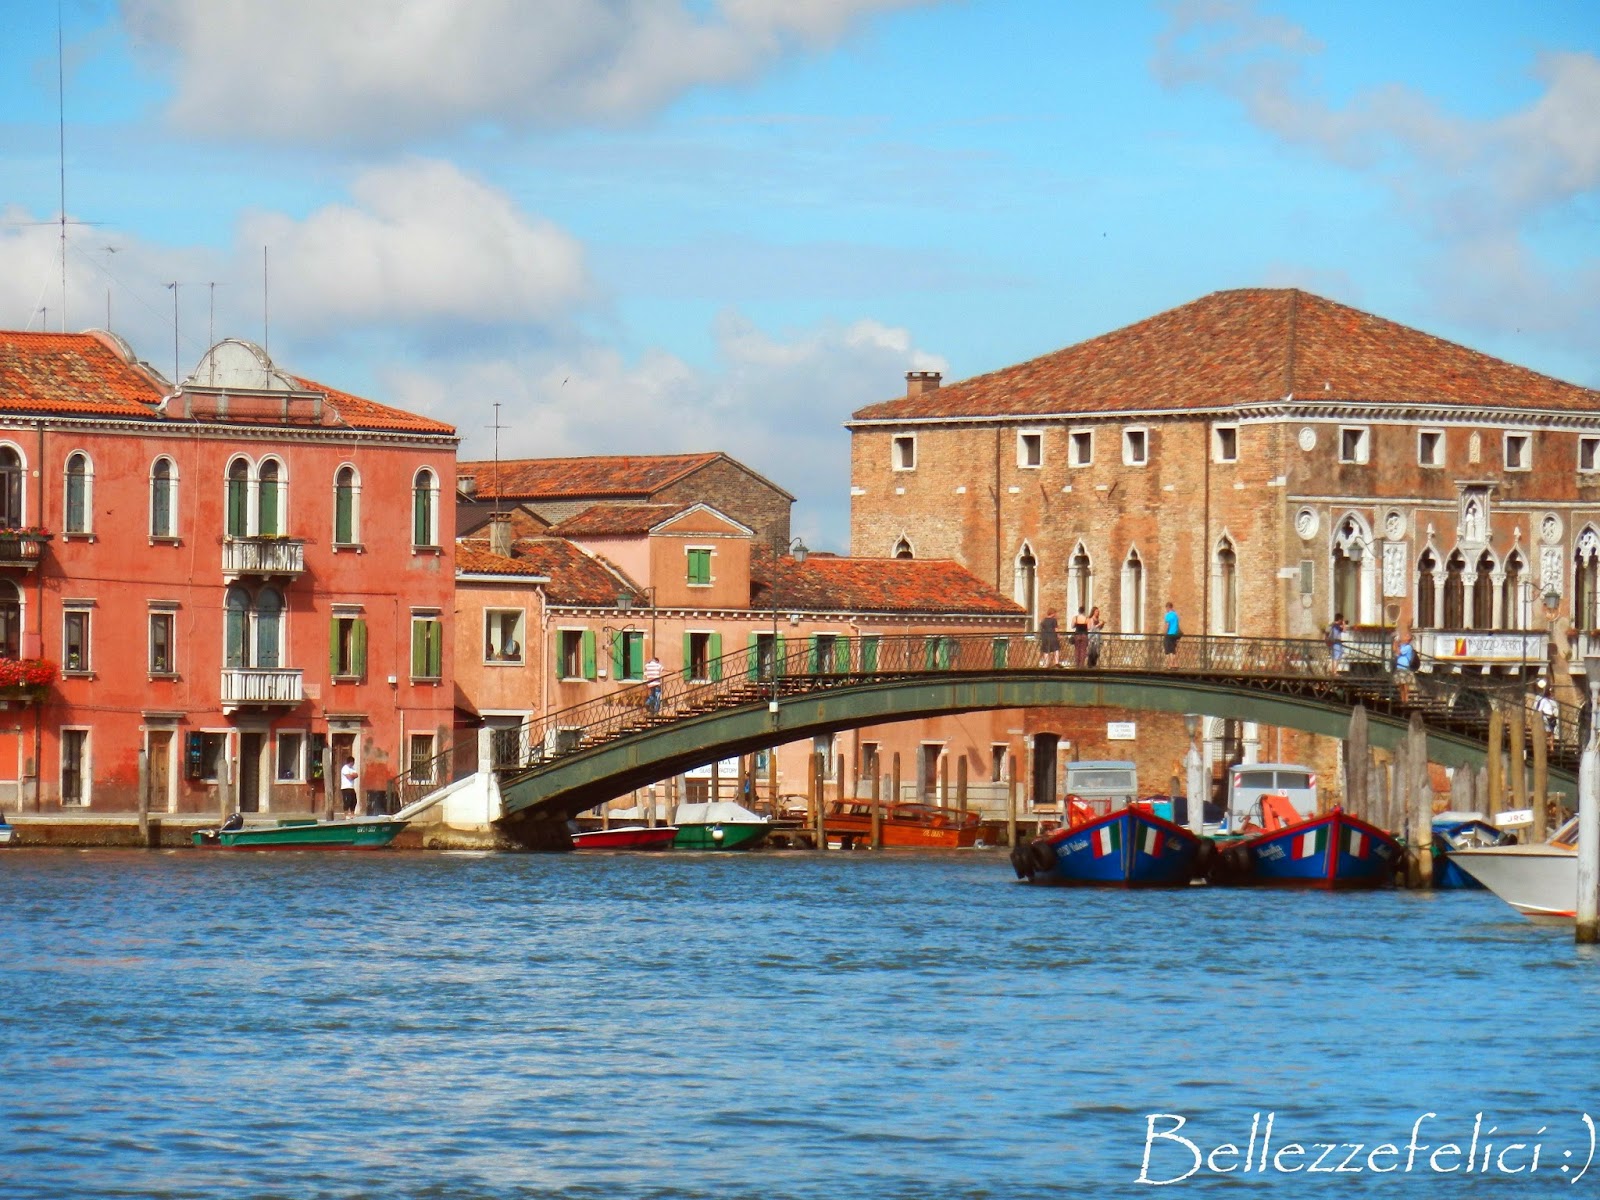 Bellezze Felici: Costume National meets Murano (Venice)!!!